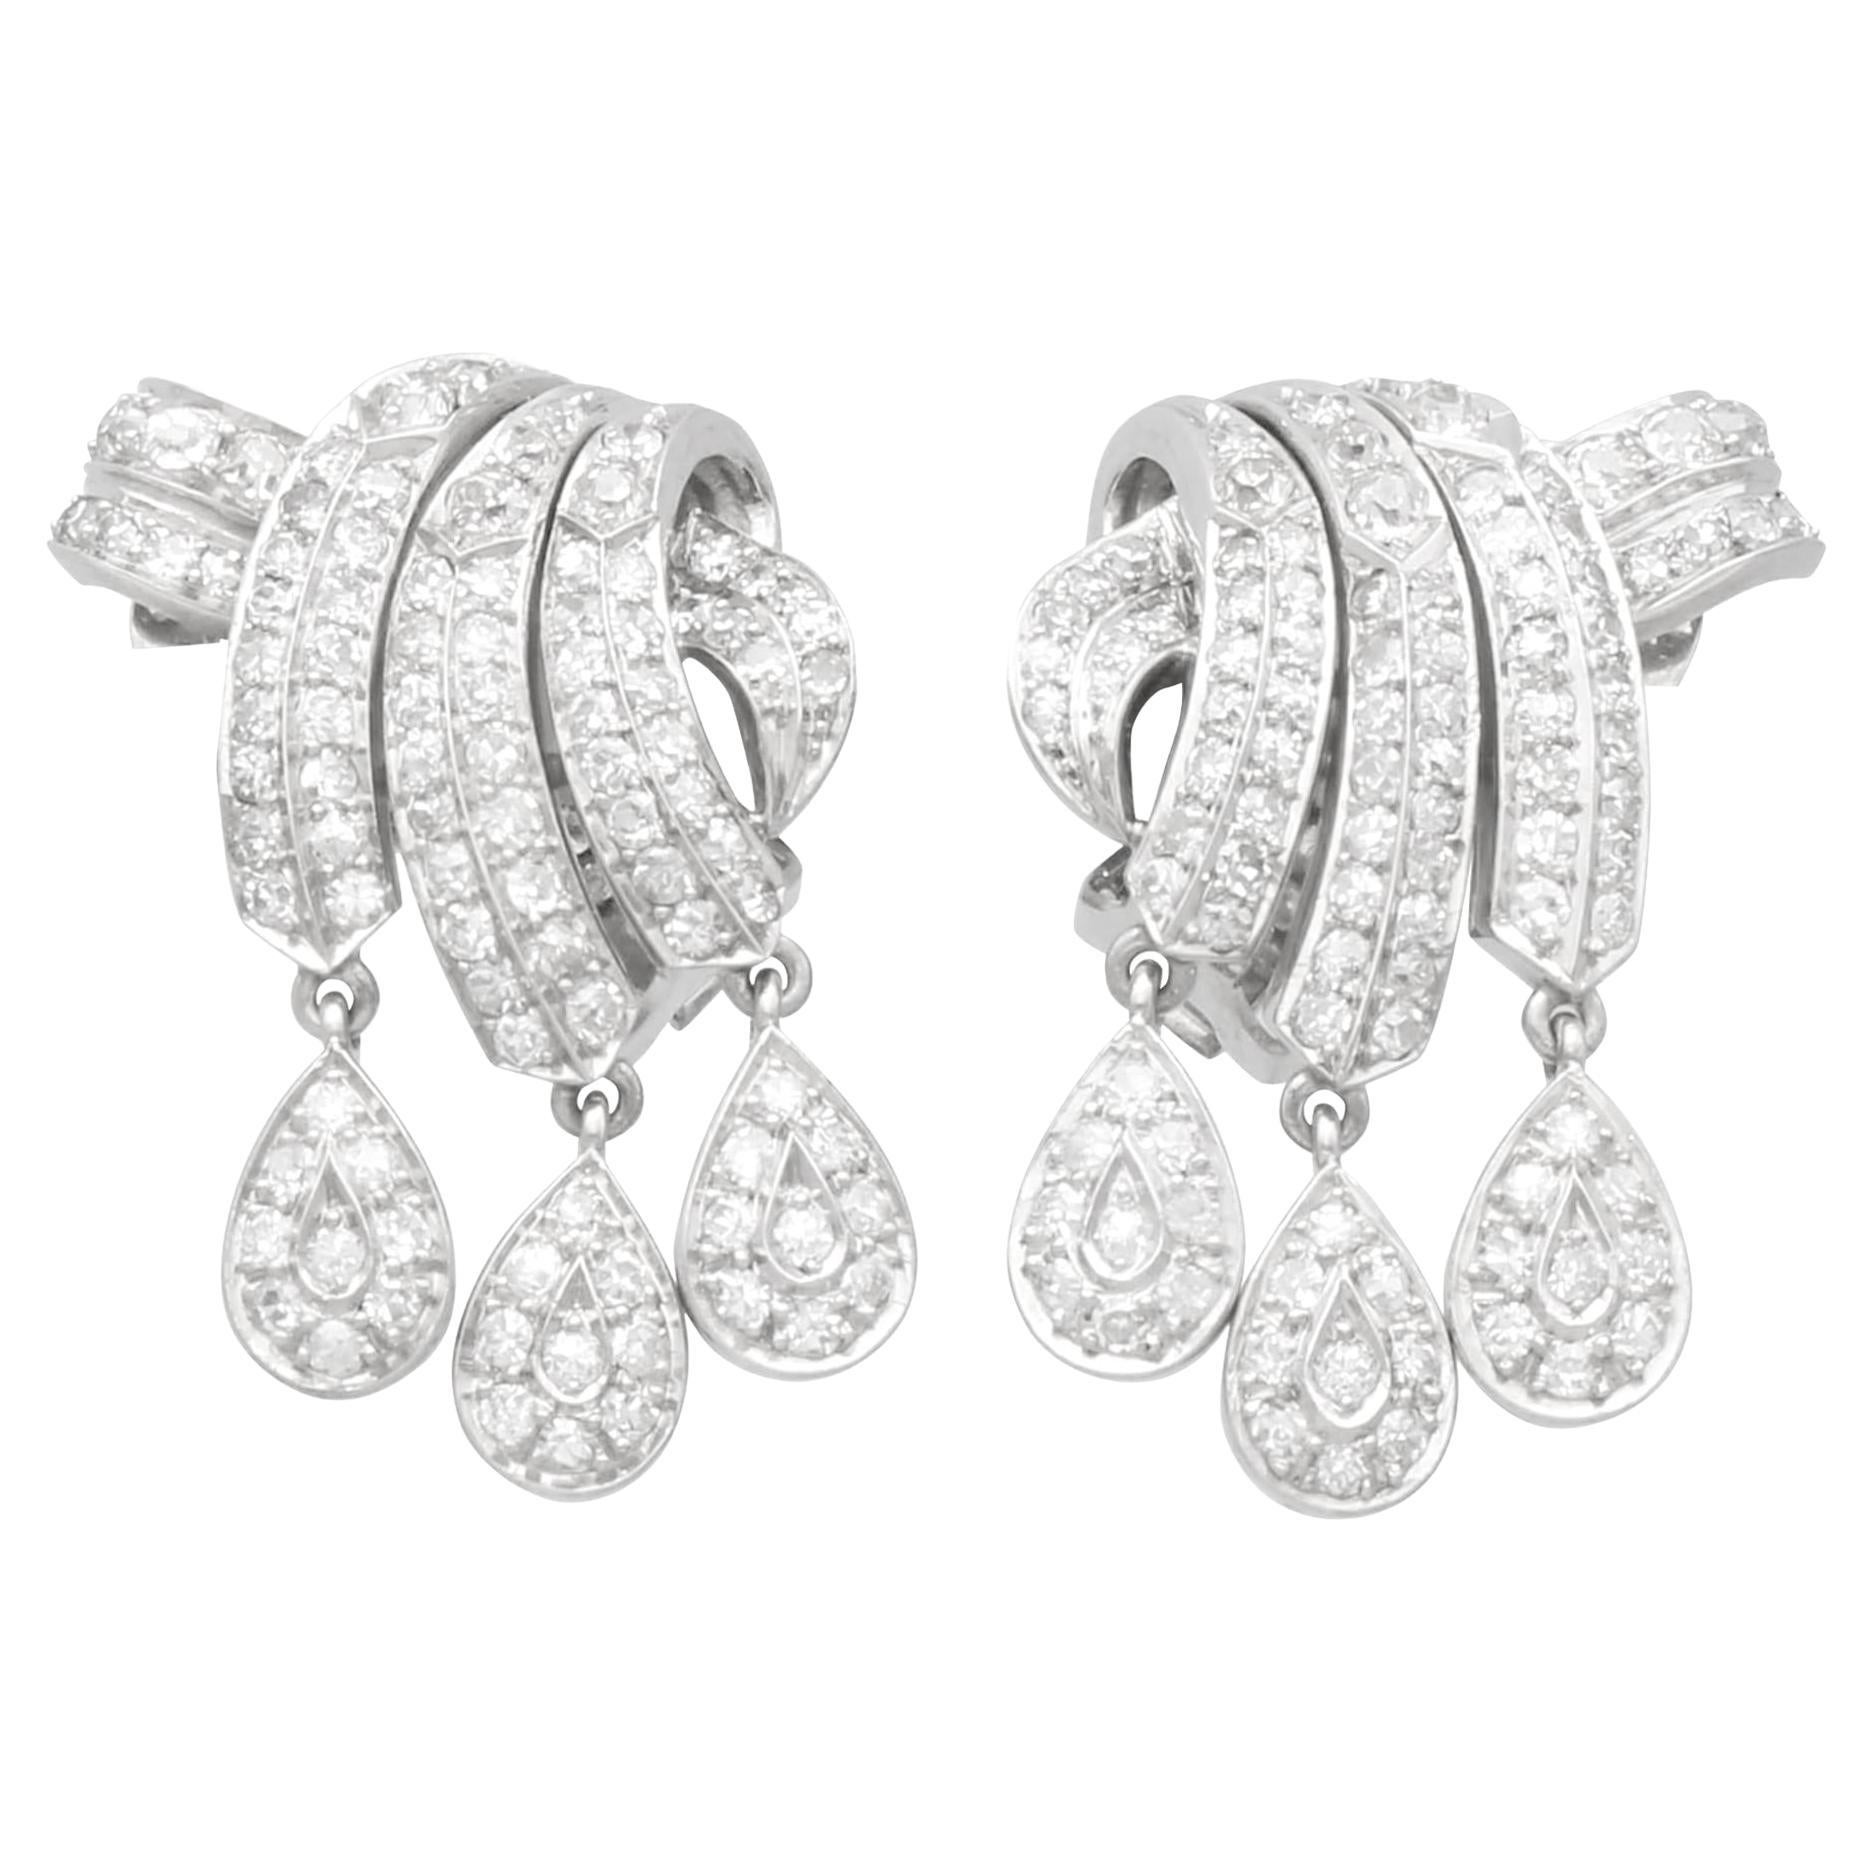 1930s Antique 4.26 Carat Diamond and Platinum Earrings